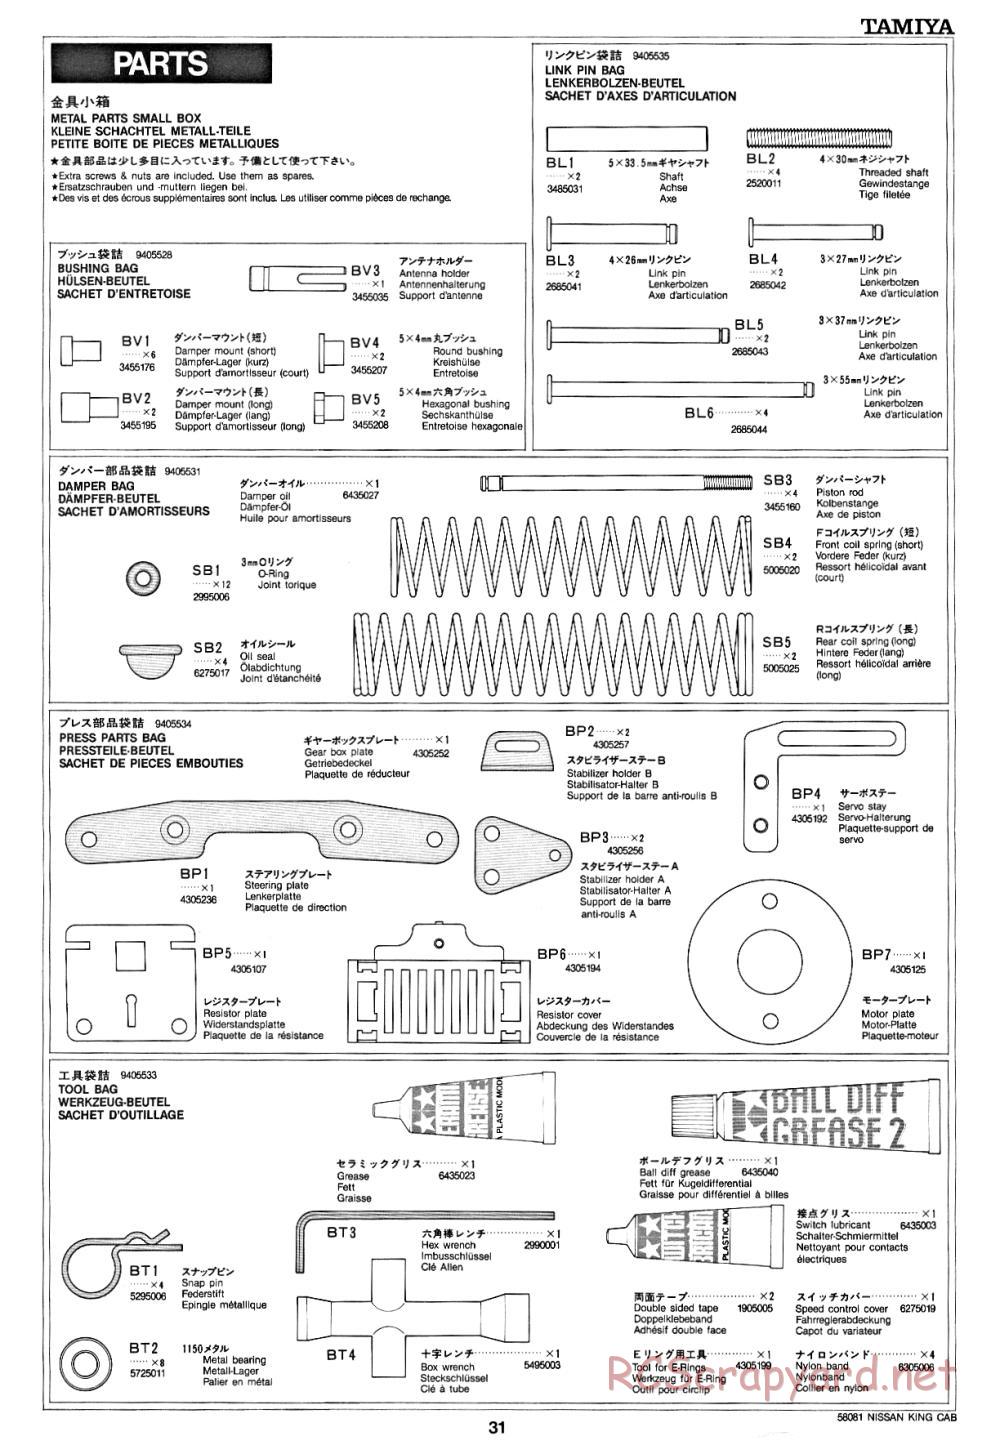 Tamiya - Nissan King Cab - 58081 - Manual - Page 31